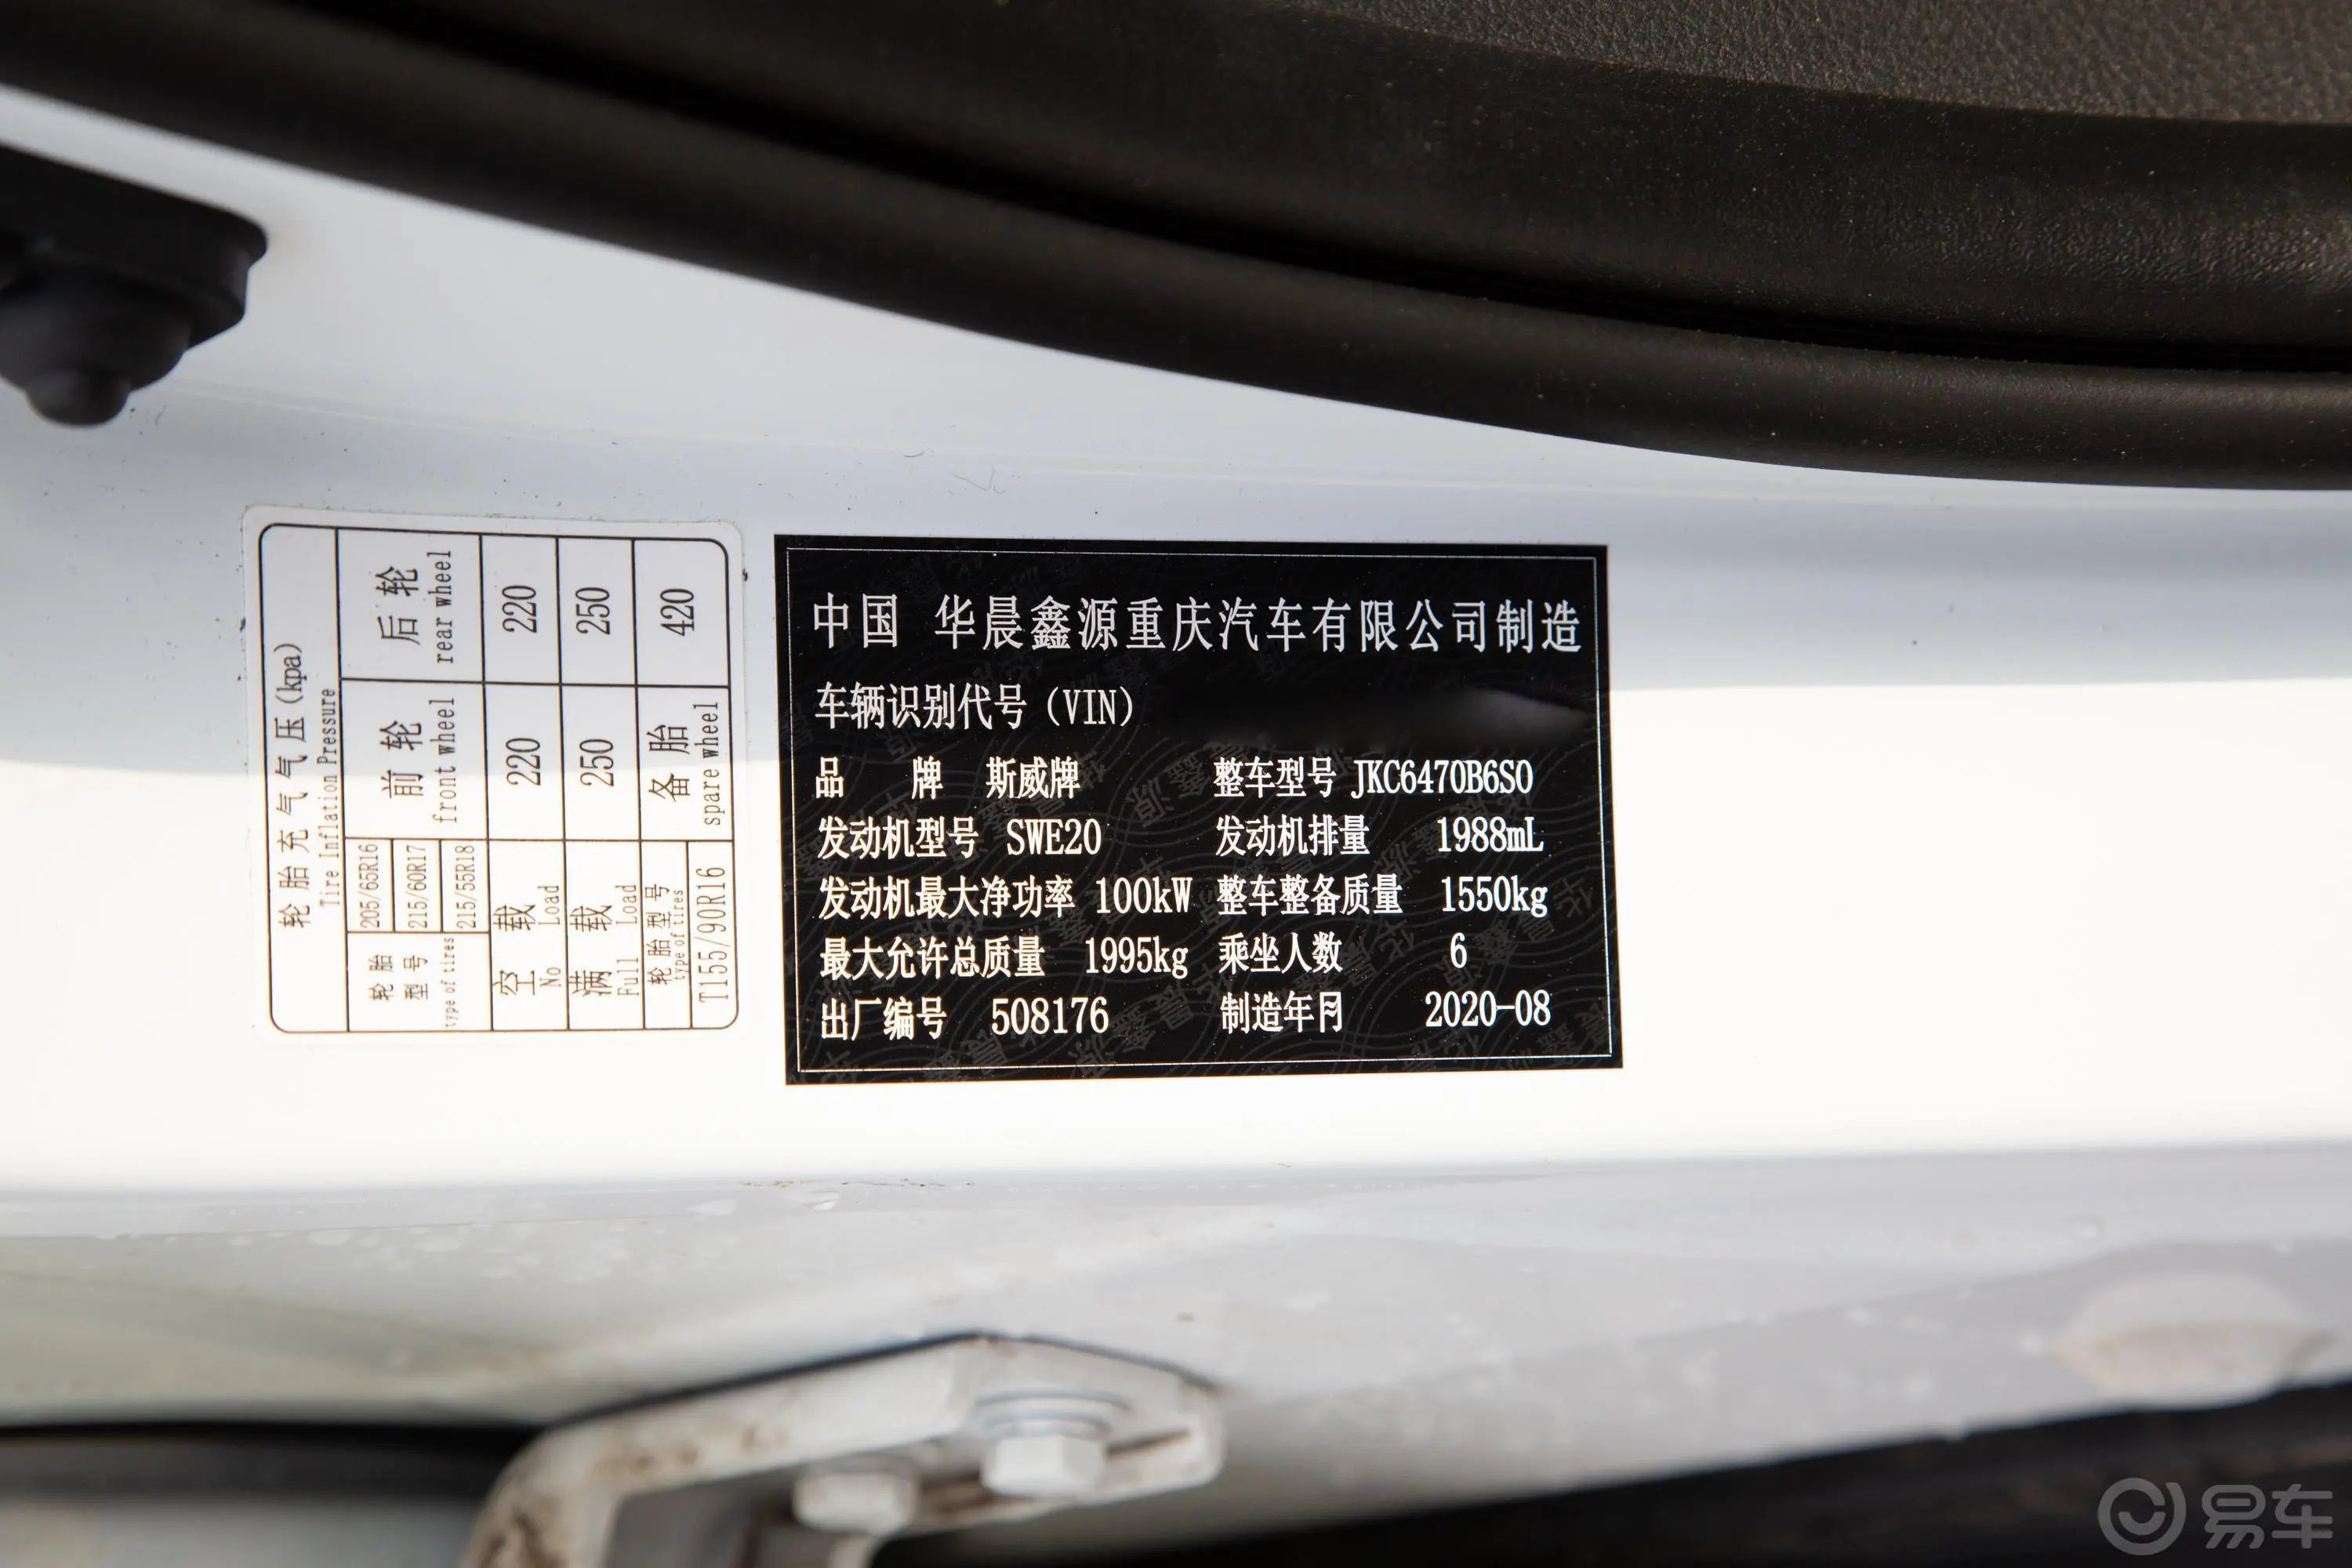 SWM斯威X72.0L 手动 冠军版 6座车辆信息铭牌